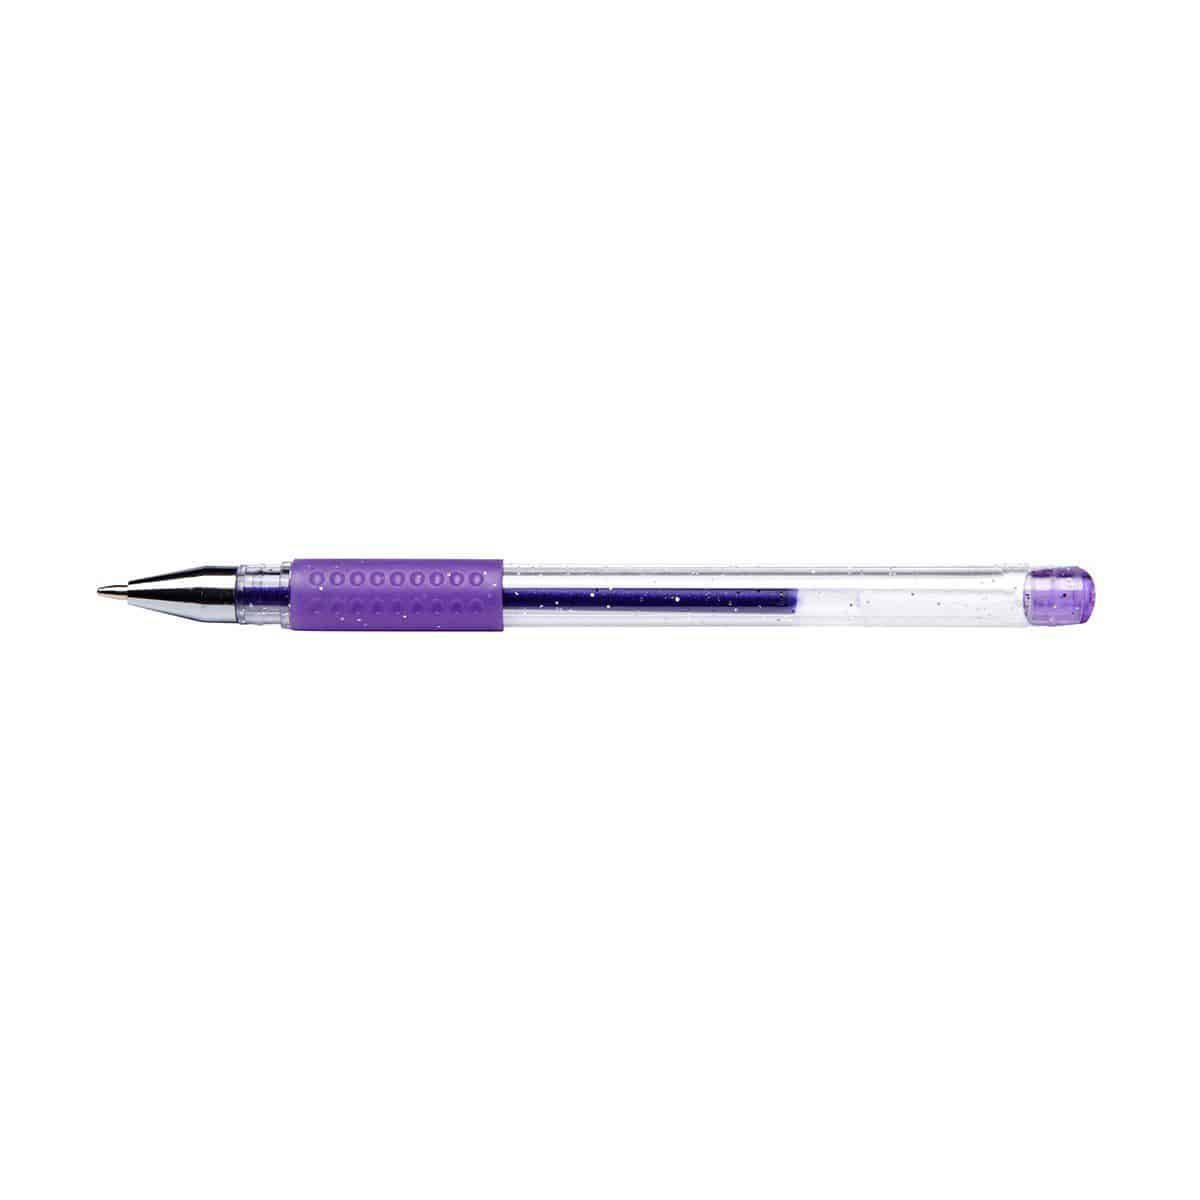 Kingart Soft Grip Glitter Gel Pens, 2.5 mm Ink Cartridge, Set of 30 